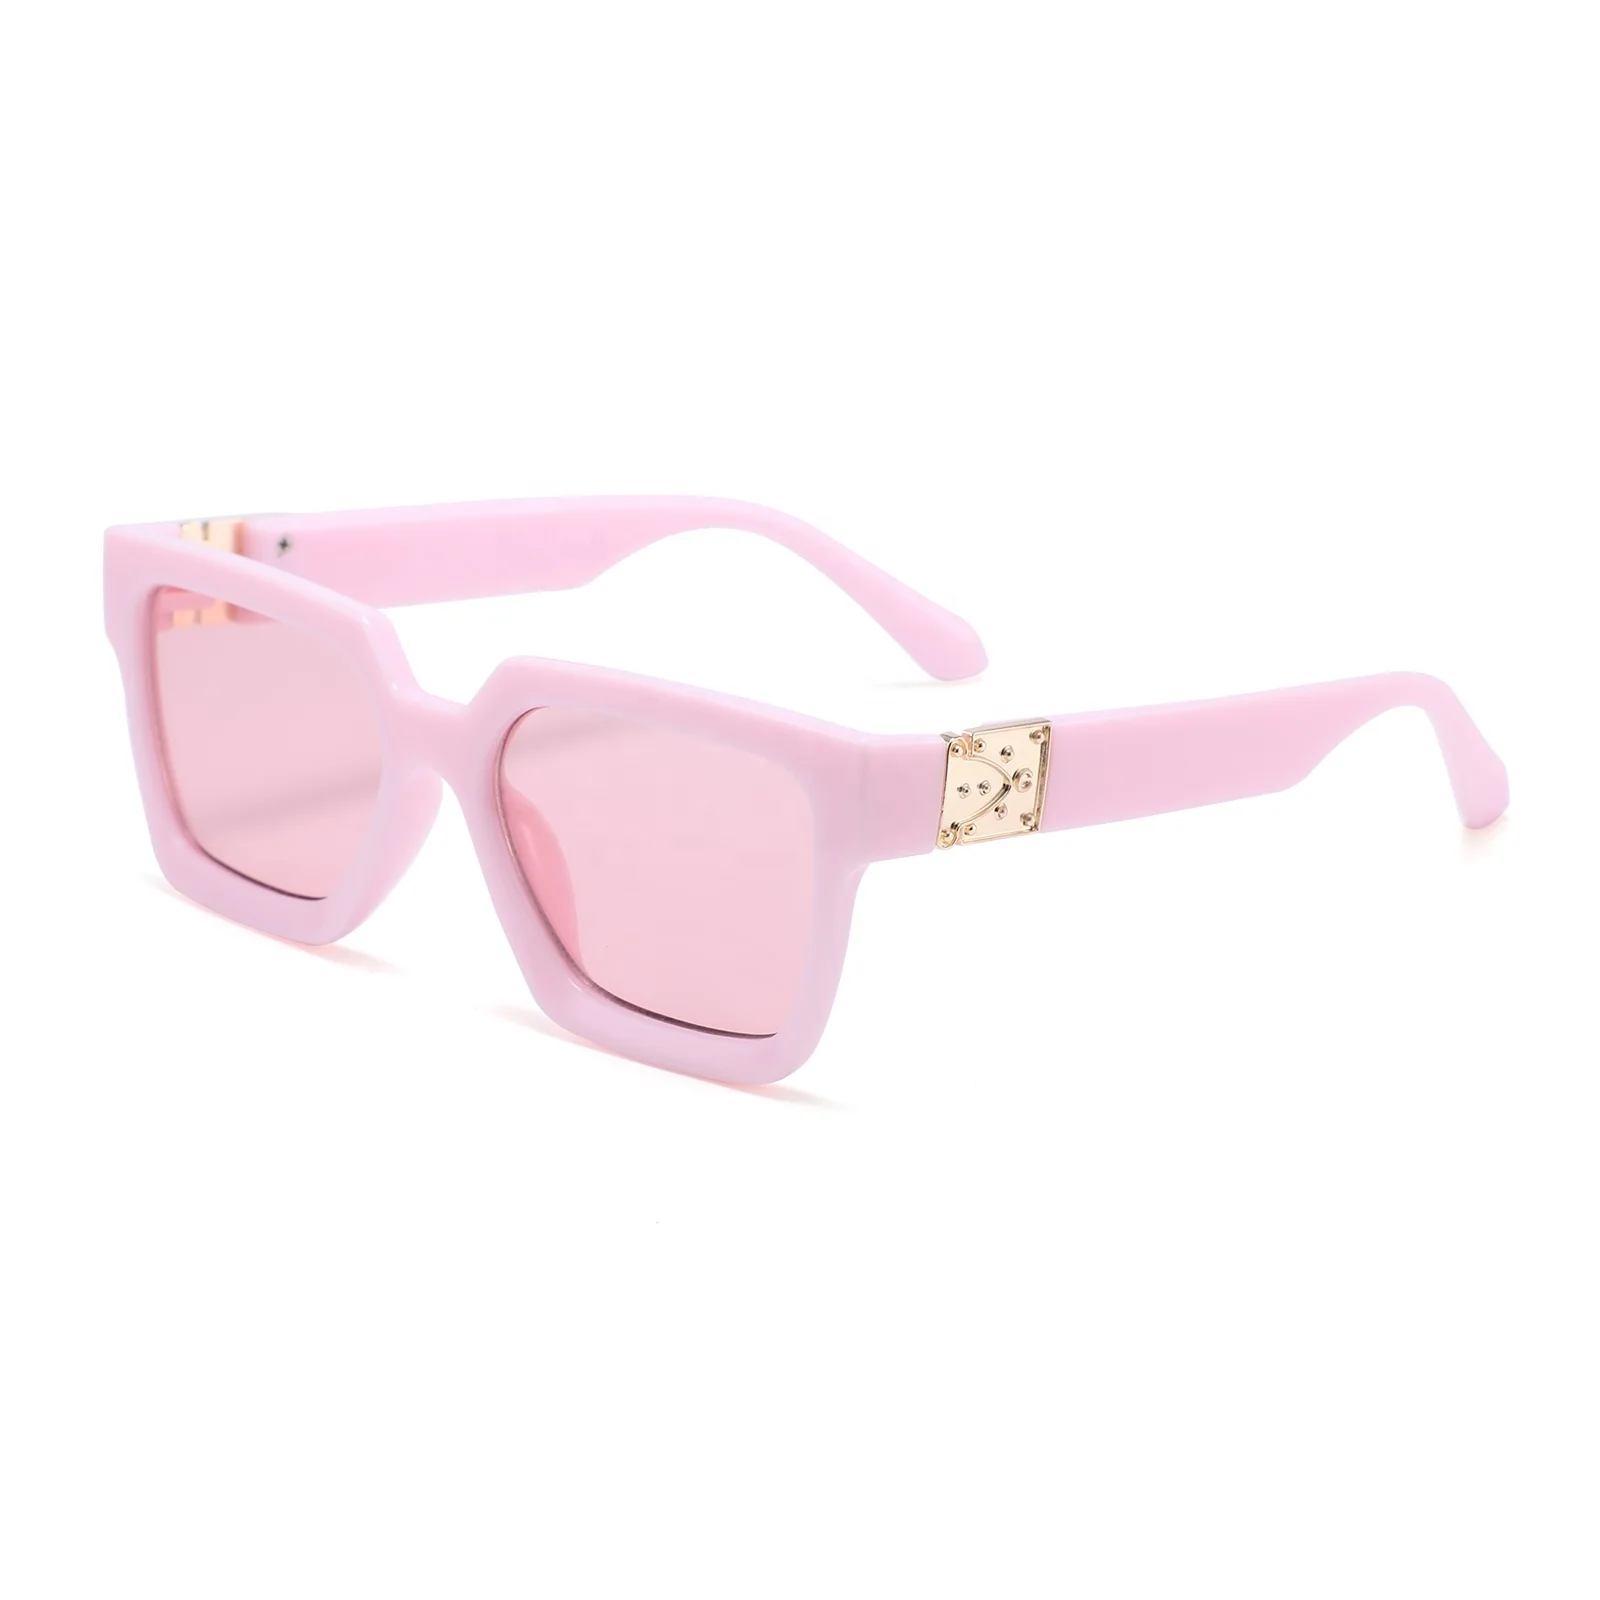 

Girls flower vintage pink eyewear cute kids ce uv400 sun glasses, Mix color